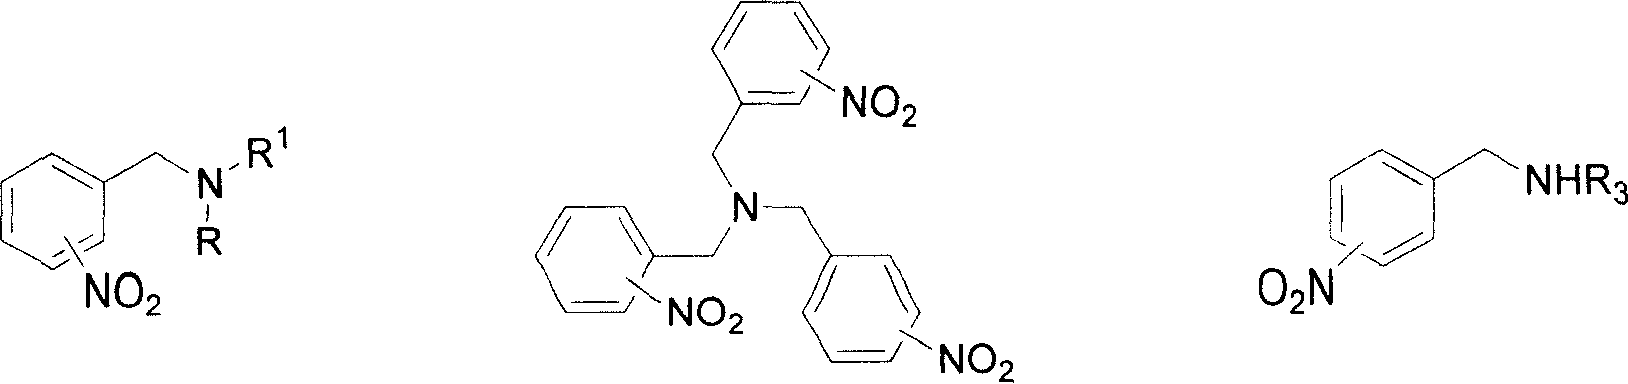 Method for reducing nitroxylbenzyl amine compound to amino-benzylamine hydrochloride